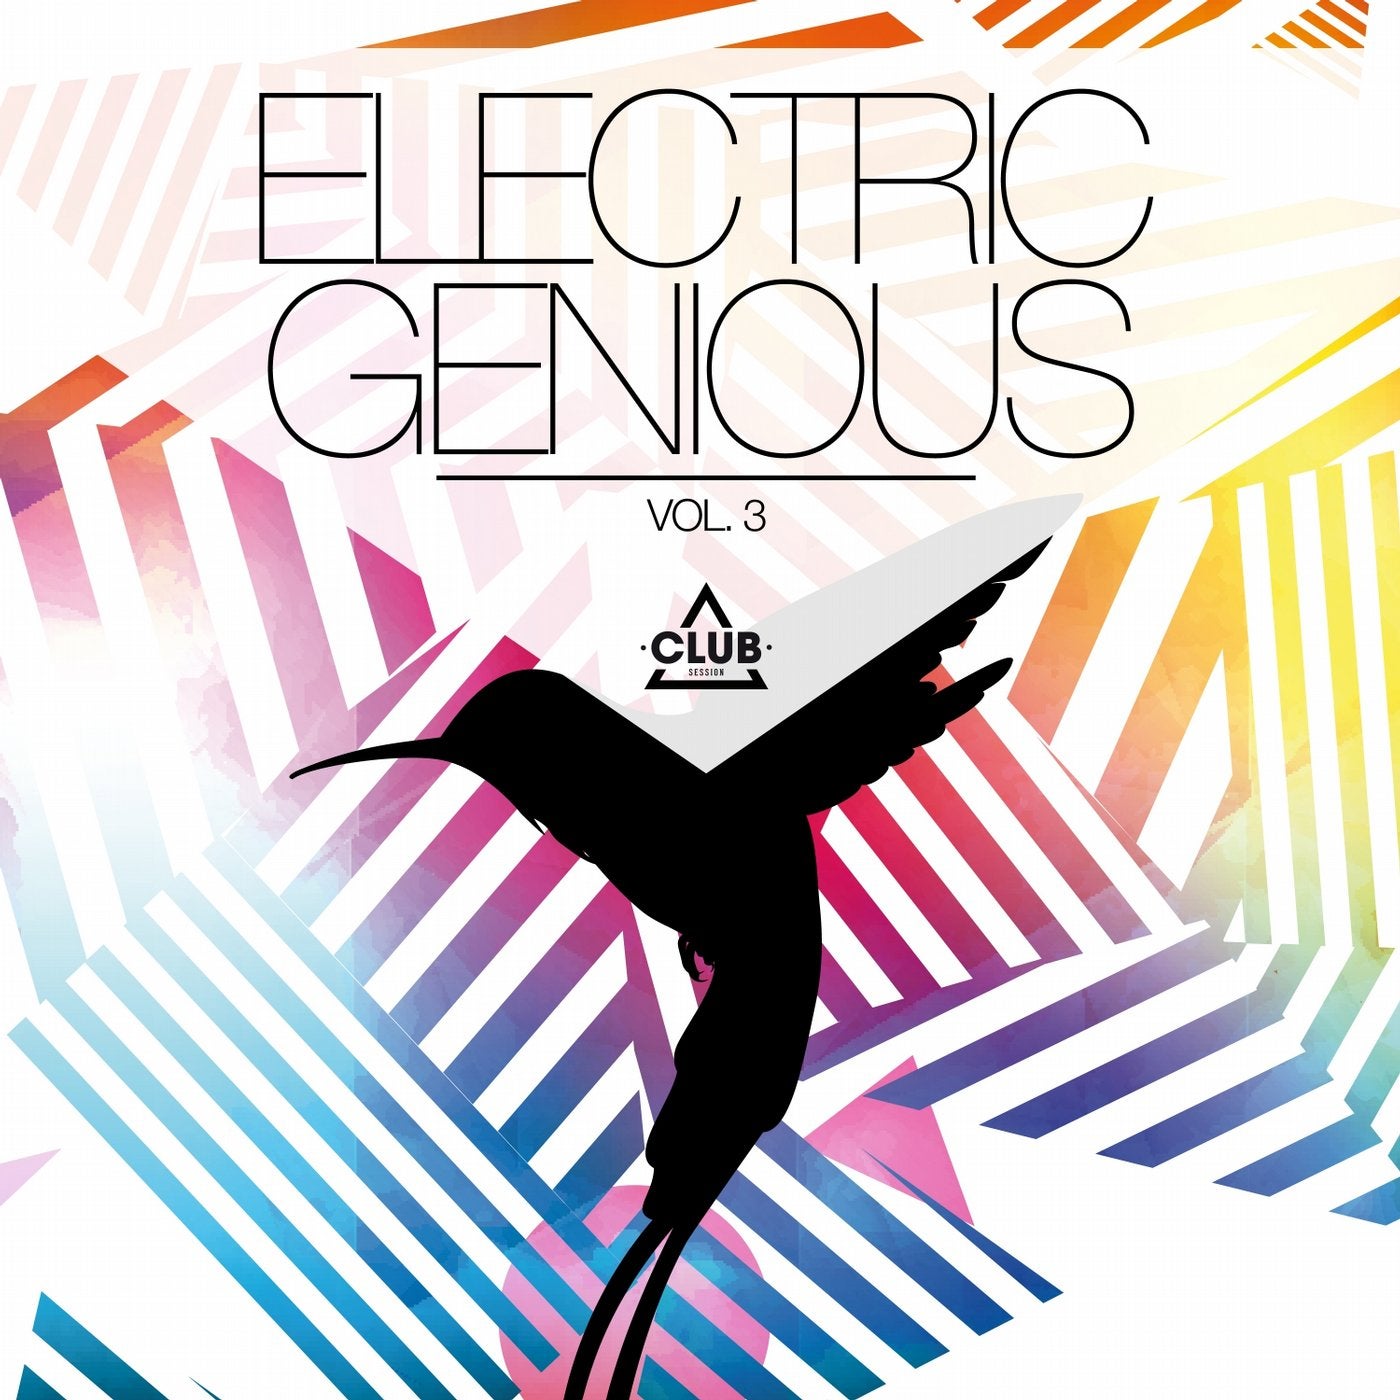 Electric Genious Vol. 3